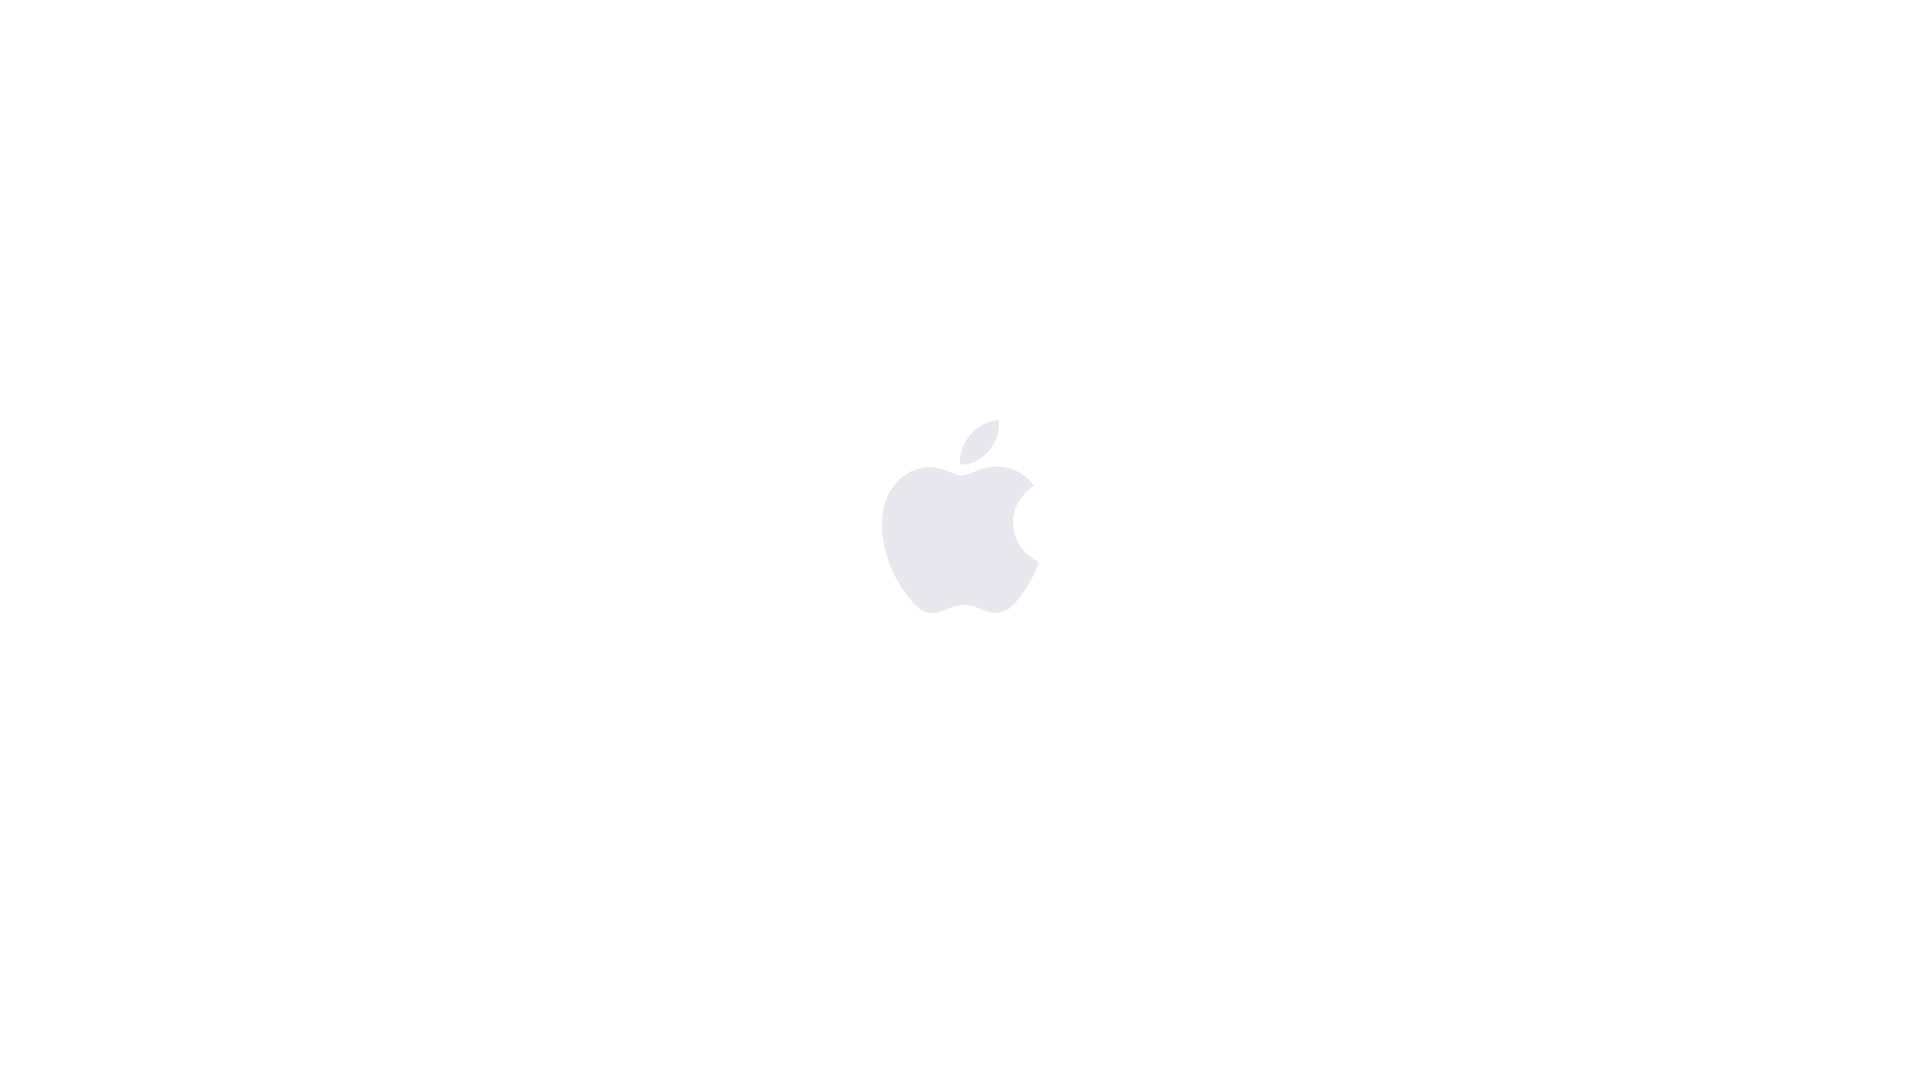 Macbook pro white screen with apple logo cherie noel